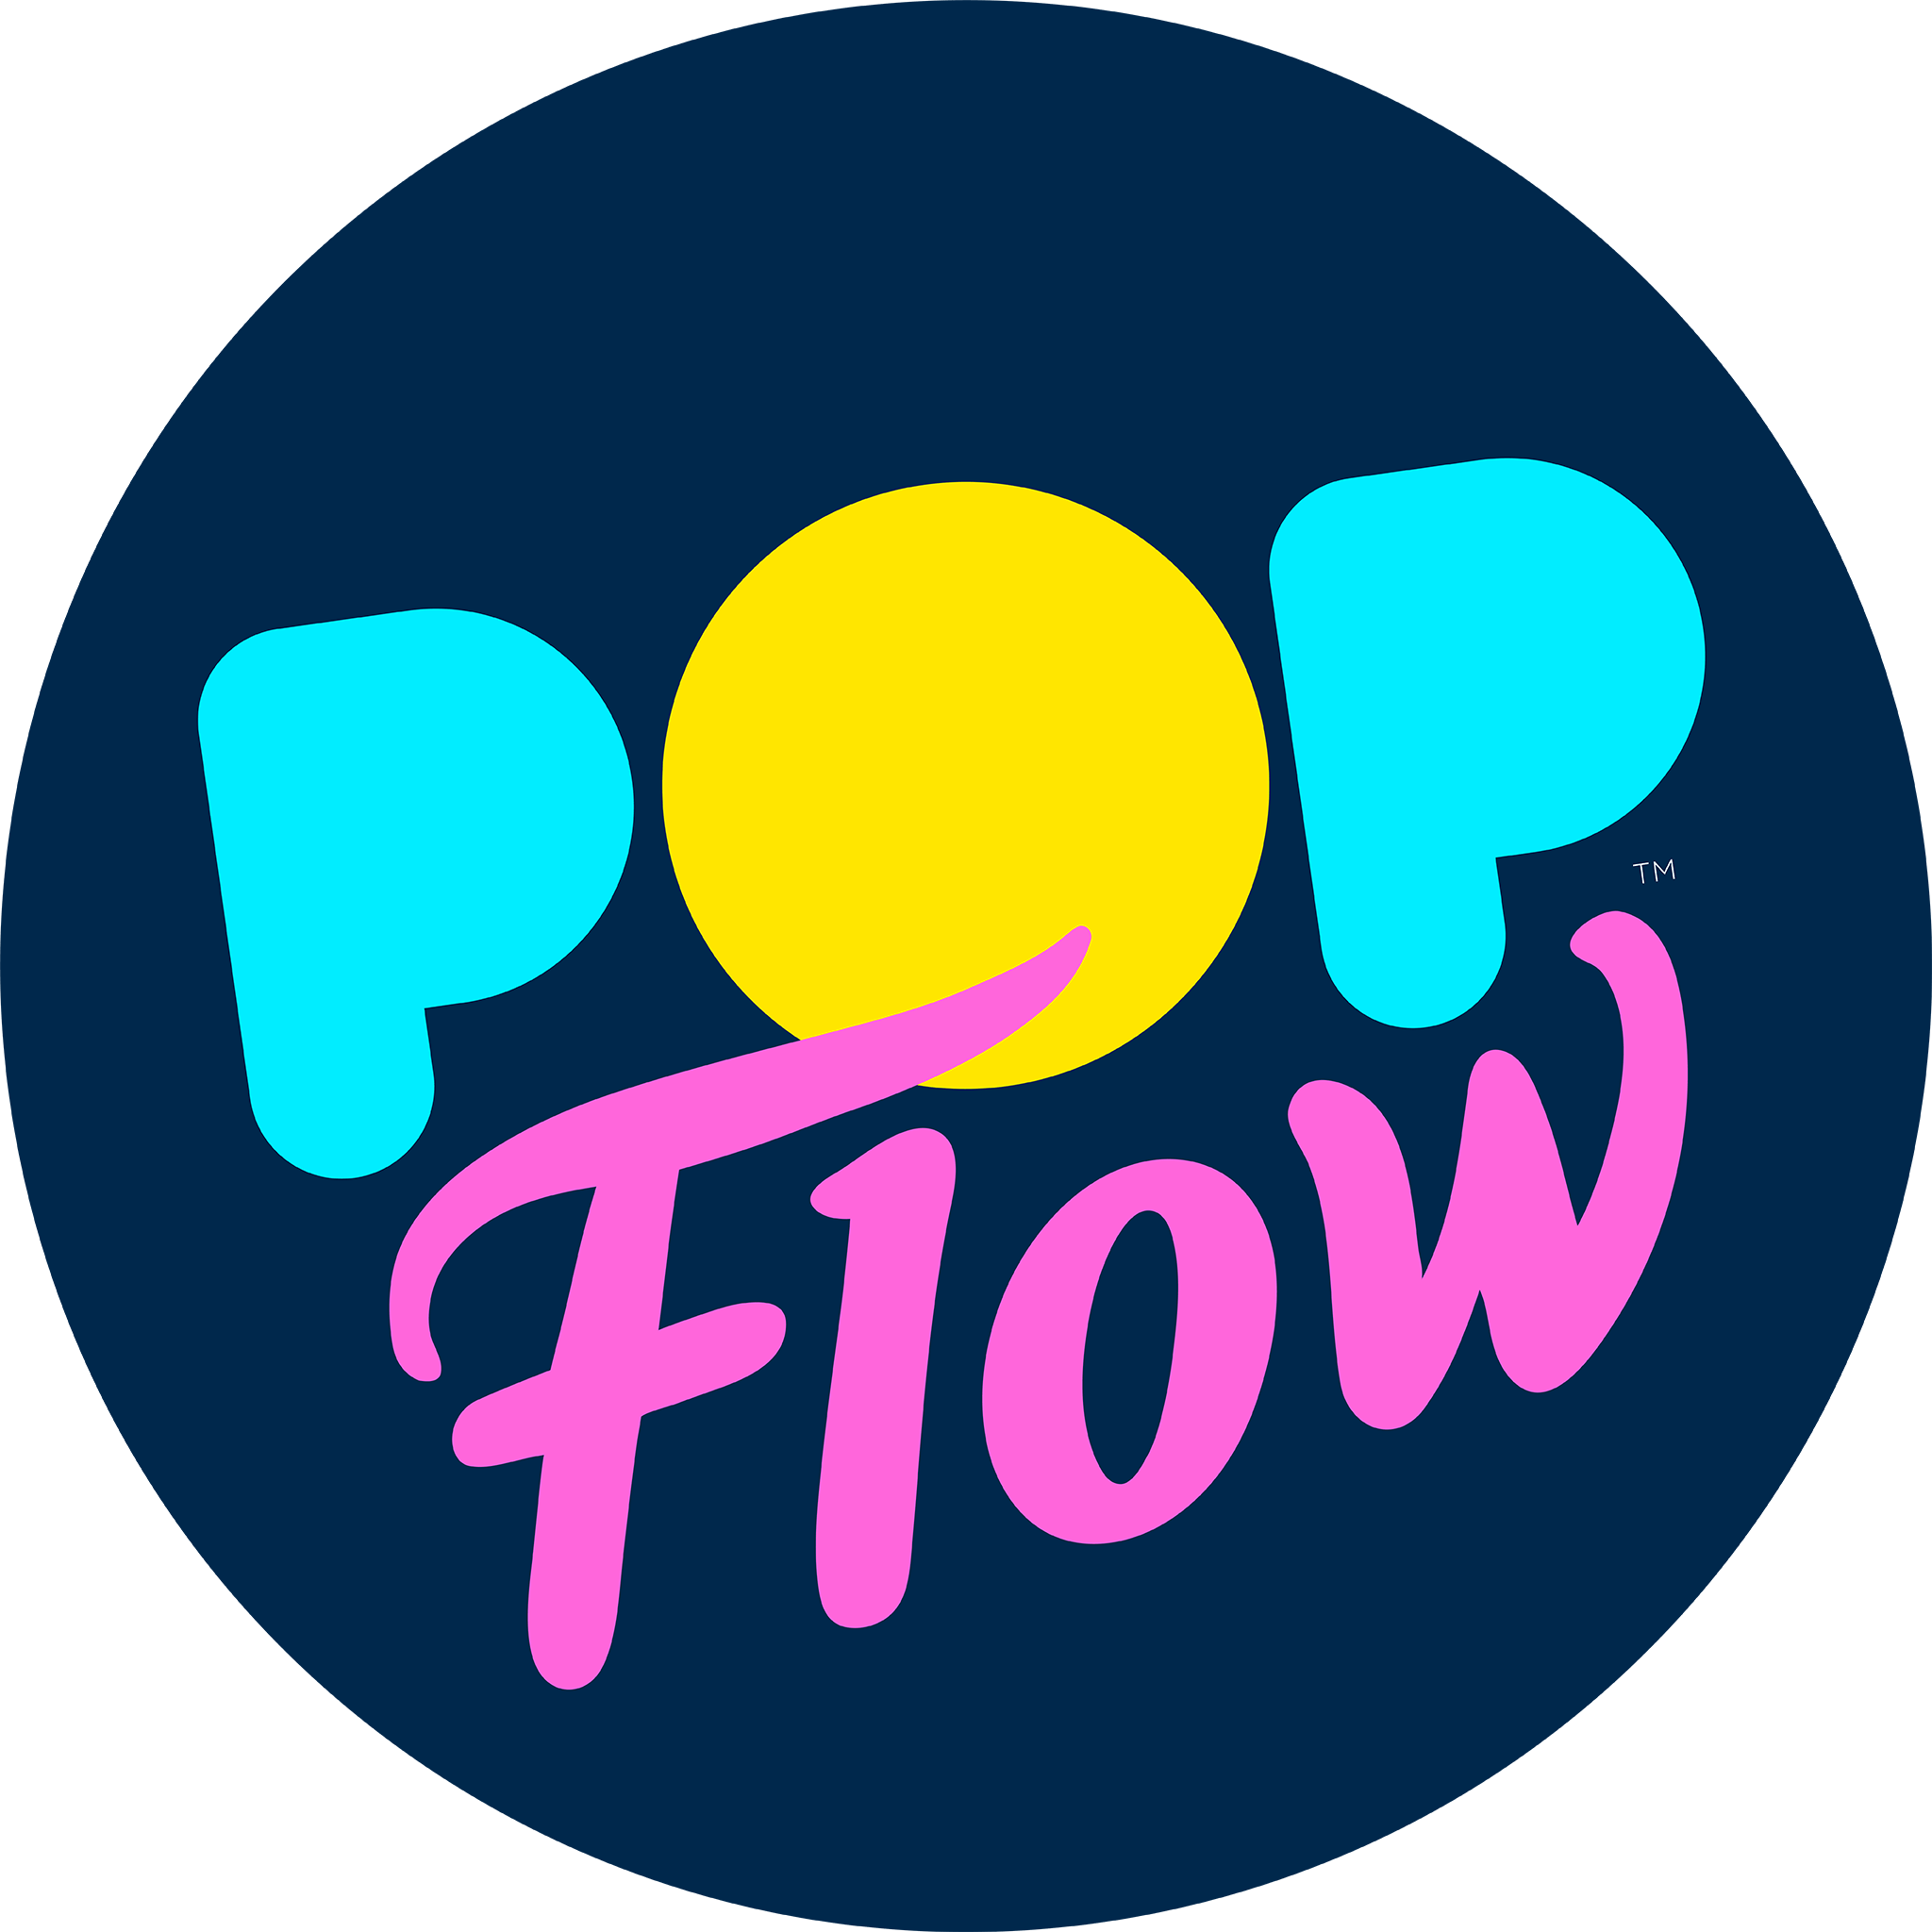 POPflow Design